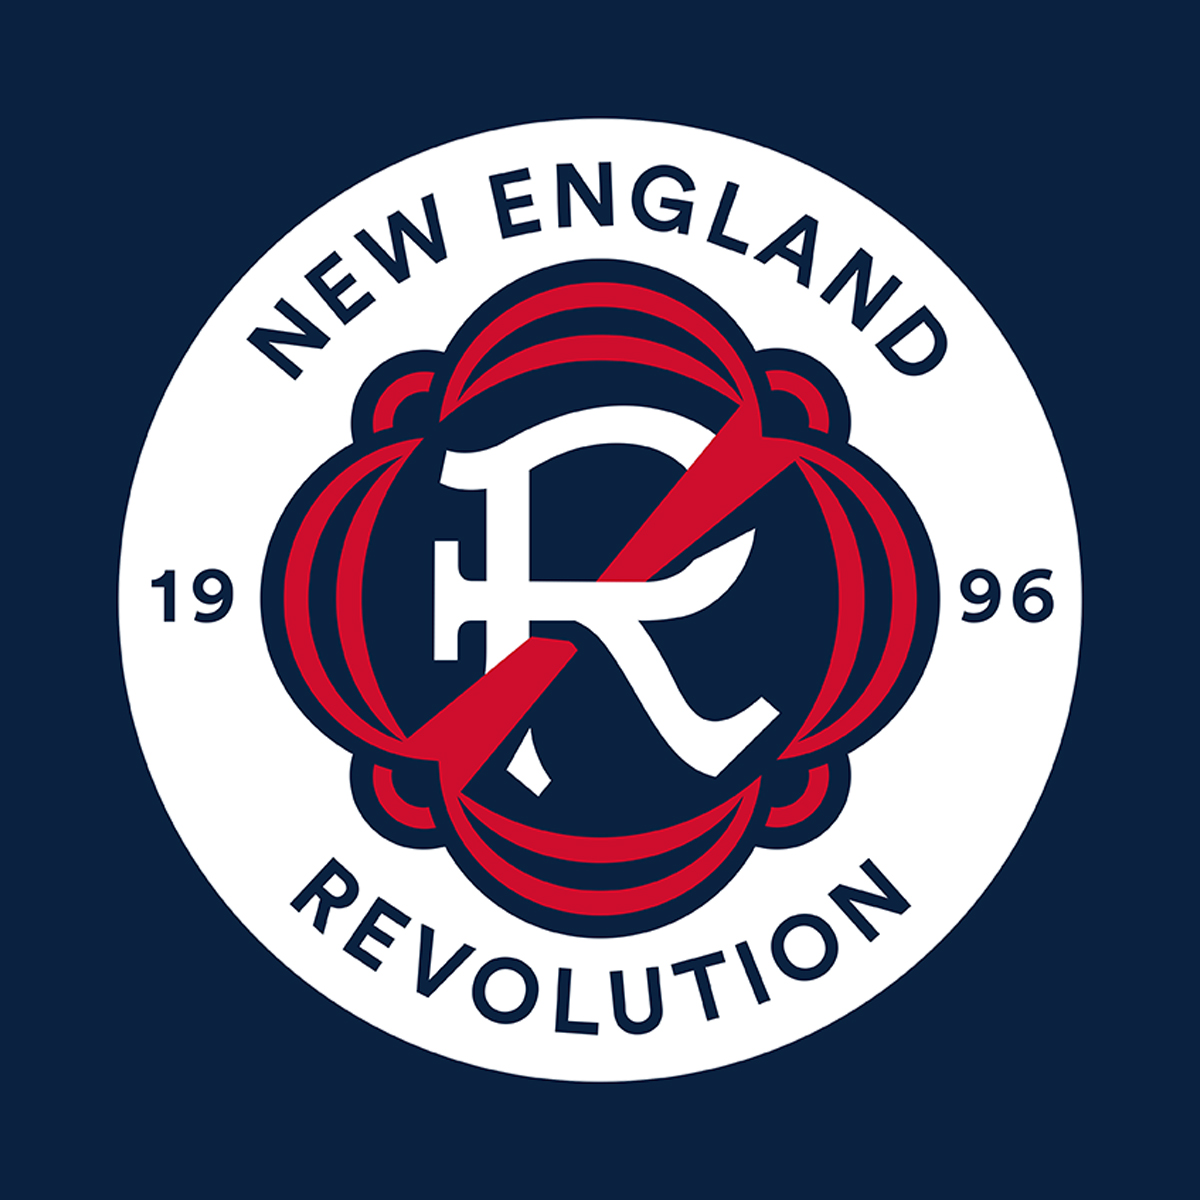 New England Revolution vs. DC United